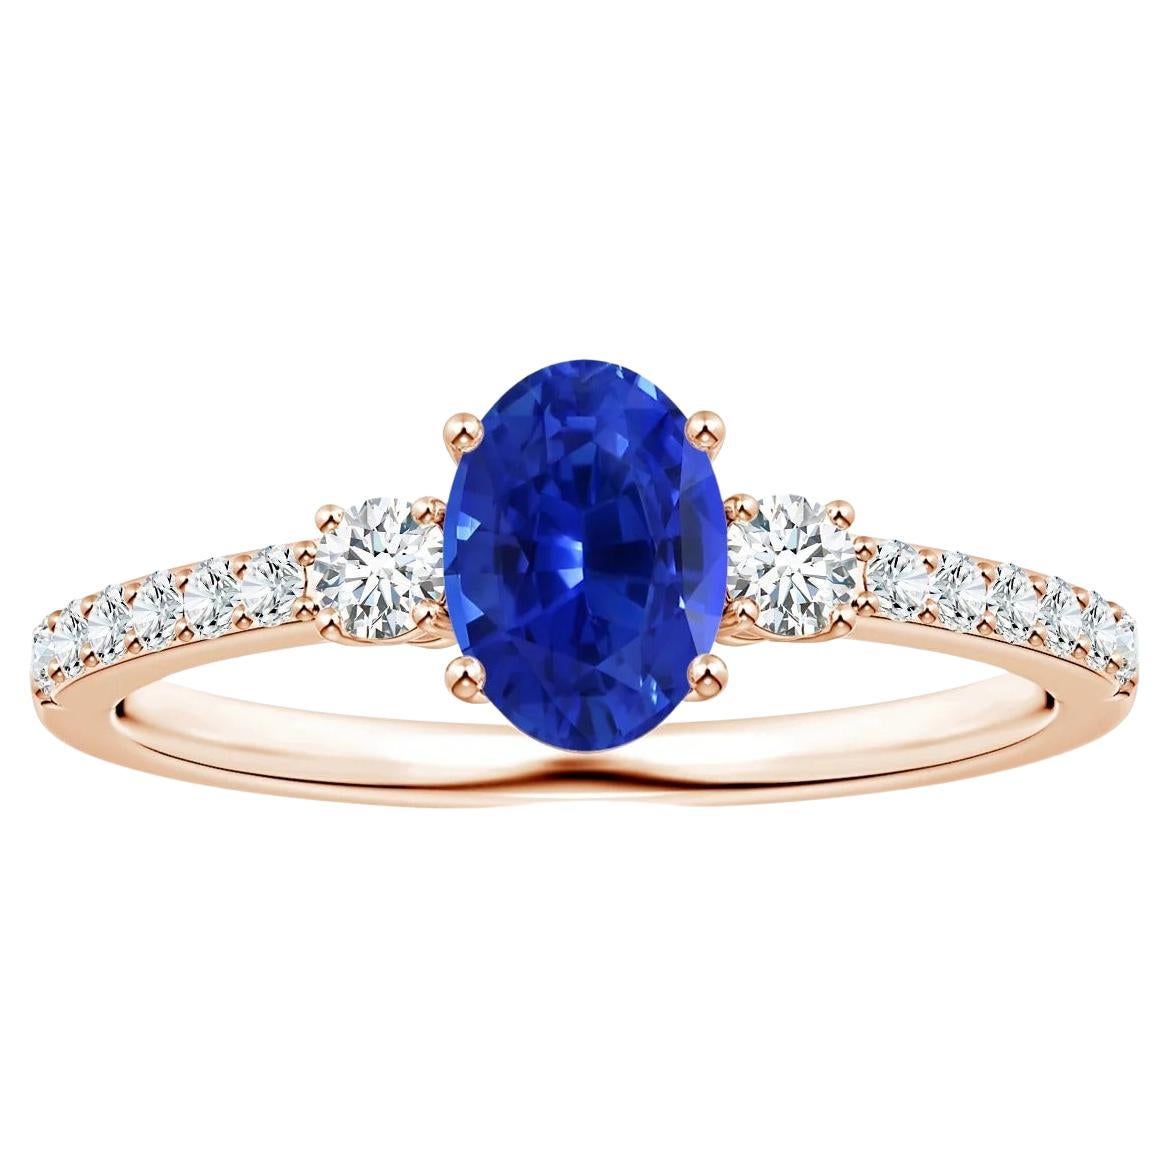 Angara Gia Bague en or rose à 3 pierres avec saphir bleu naturel certifié et diamants